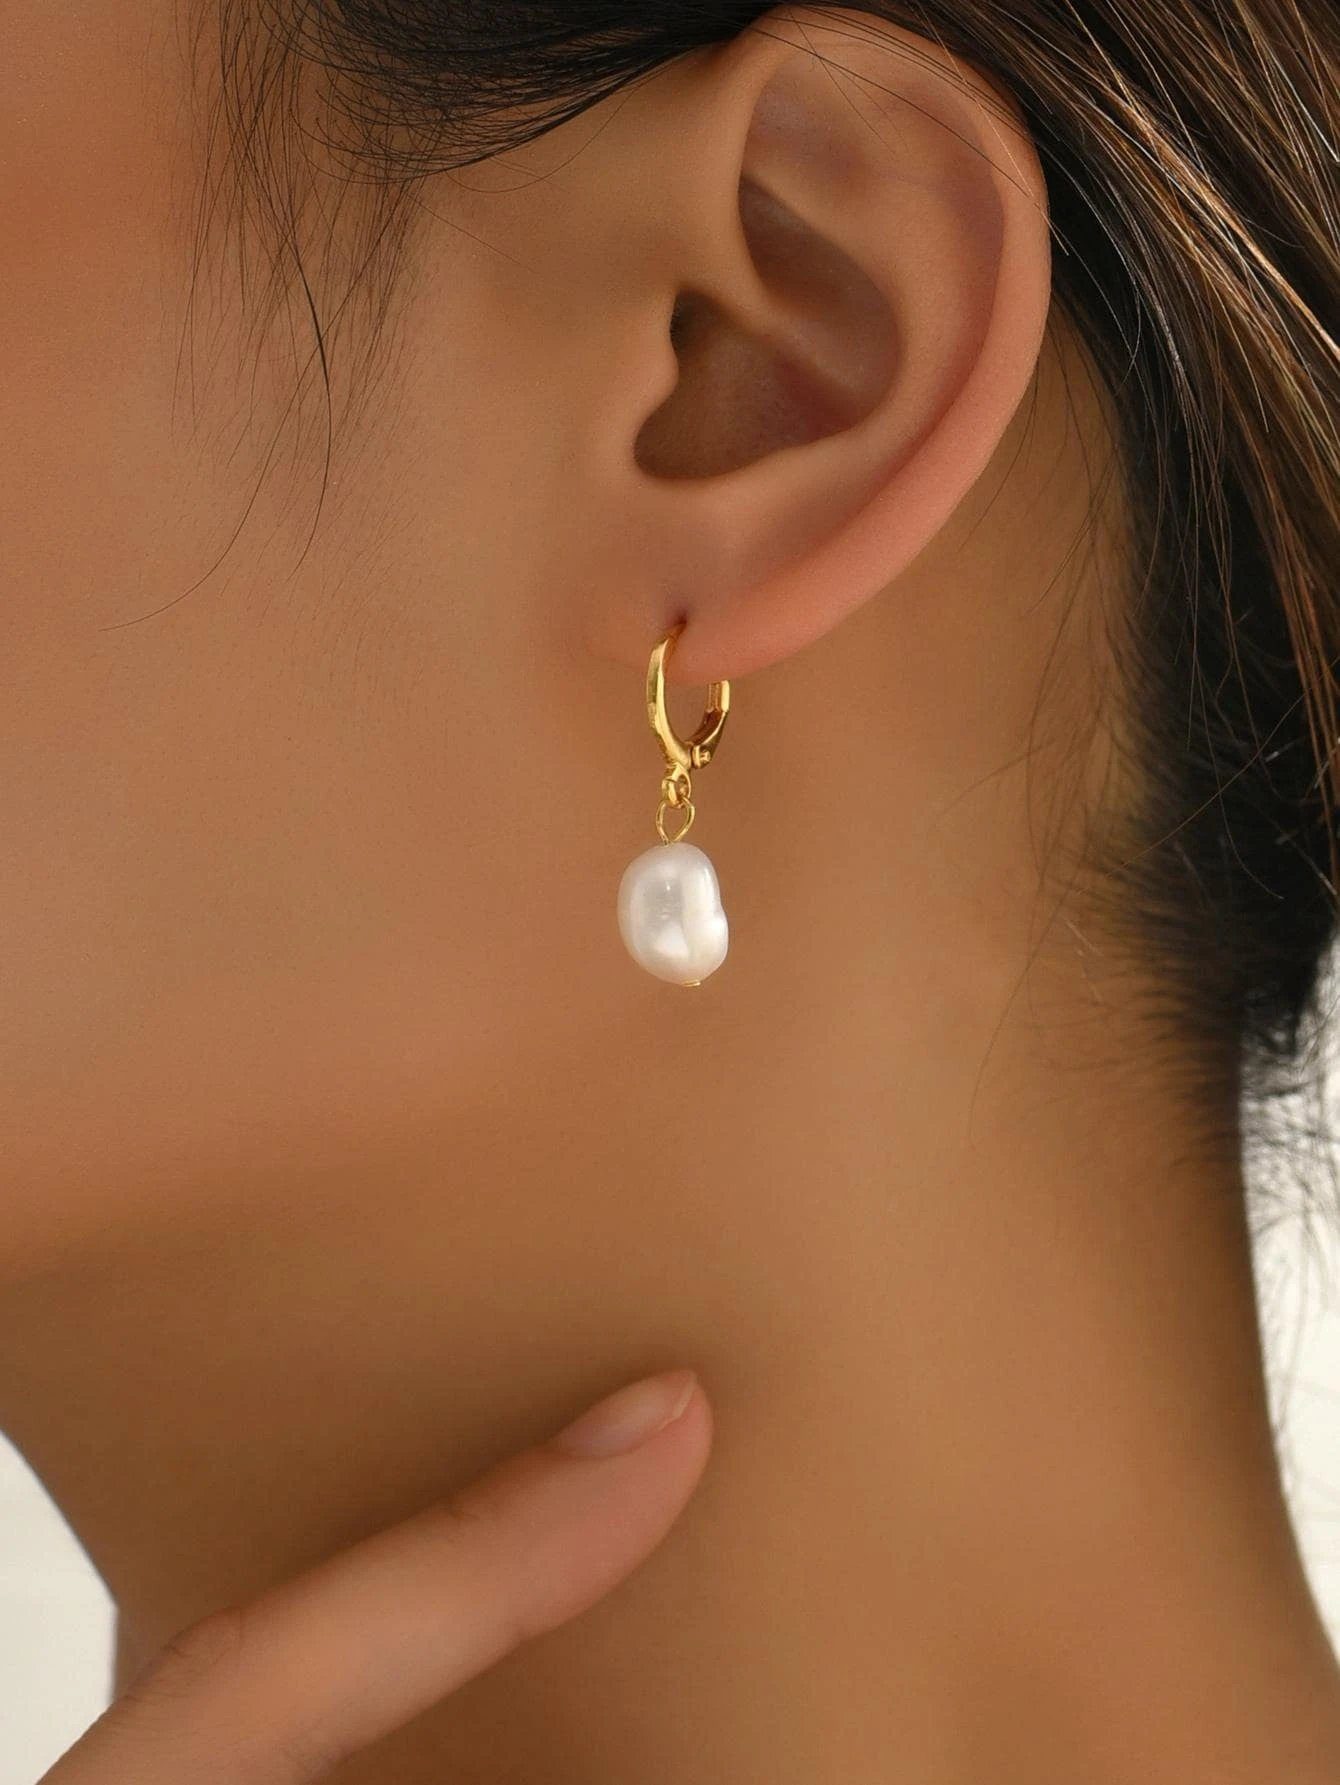 Haiaveng Paar Ohrhänger Goldschmuck 10mm (2-tlg), 13mm Silber Creolen für mit Perlen 925, Frauen Perlenohrringe Anhänger